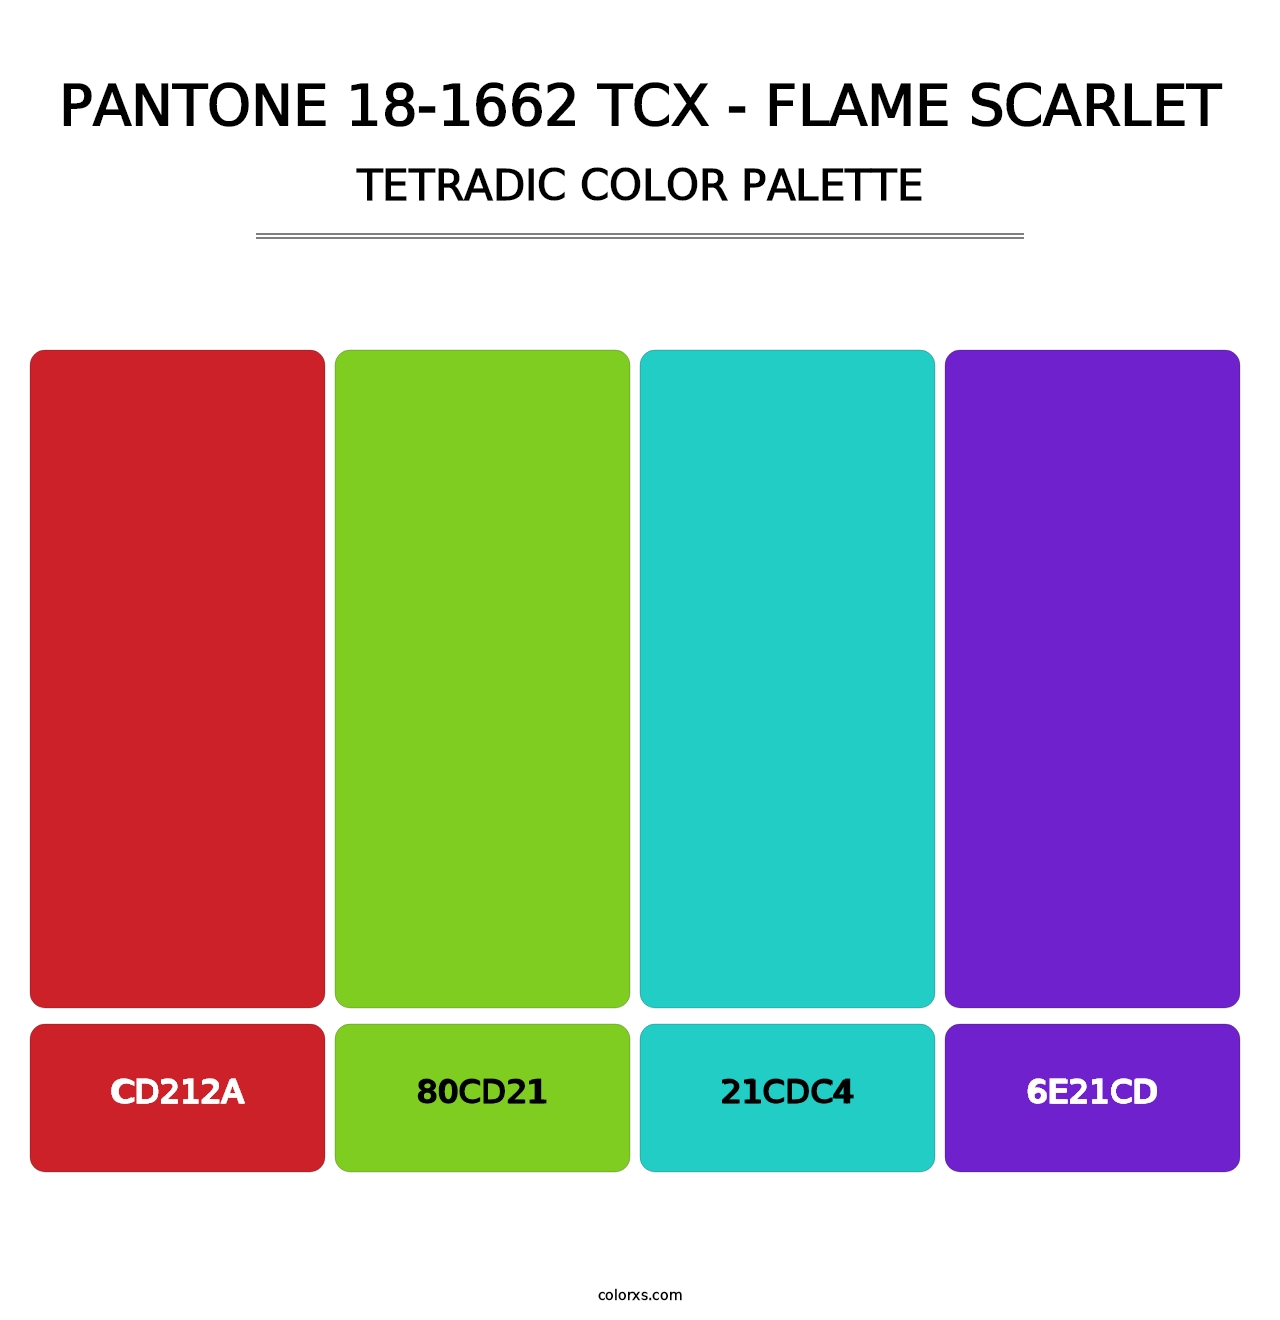 PANTONE 18-1662 TCX - Flame Scarlet - Tetradic Color Palette